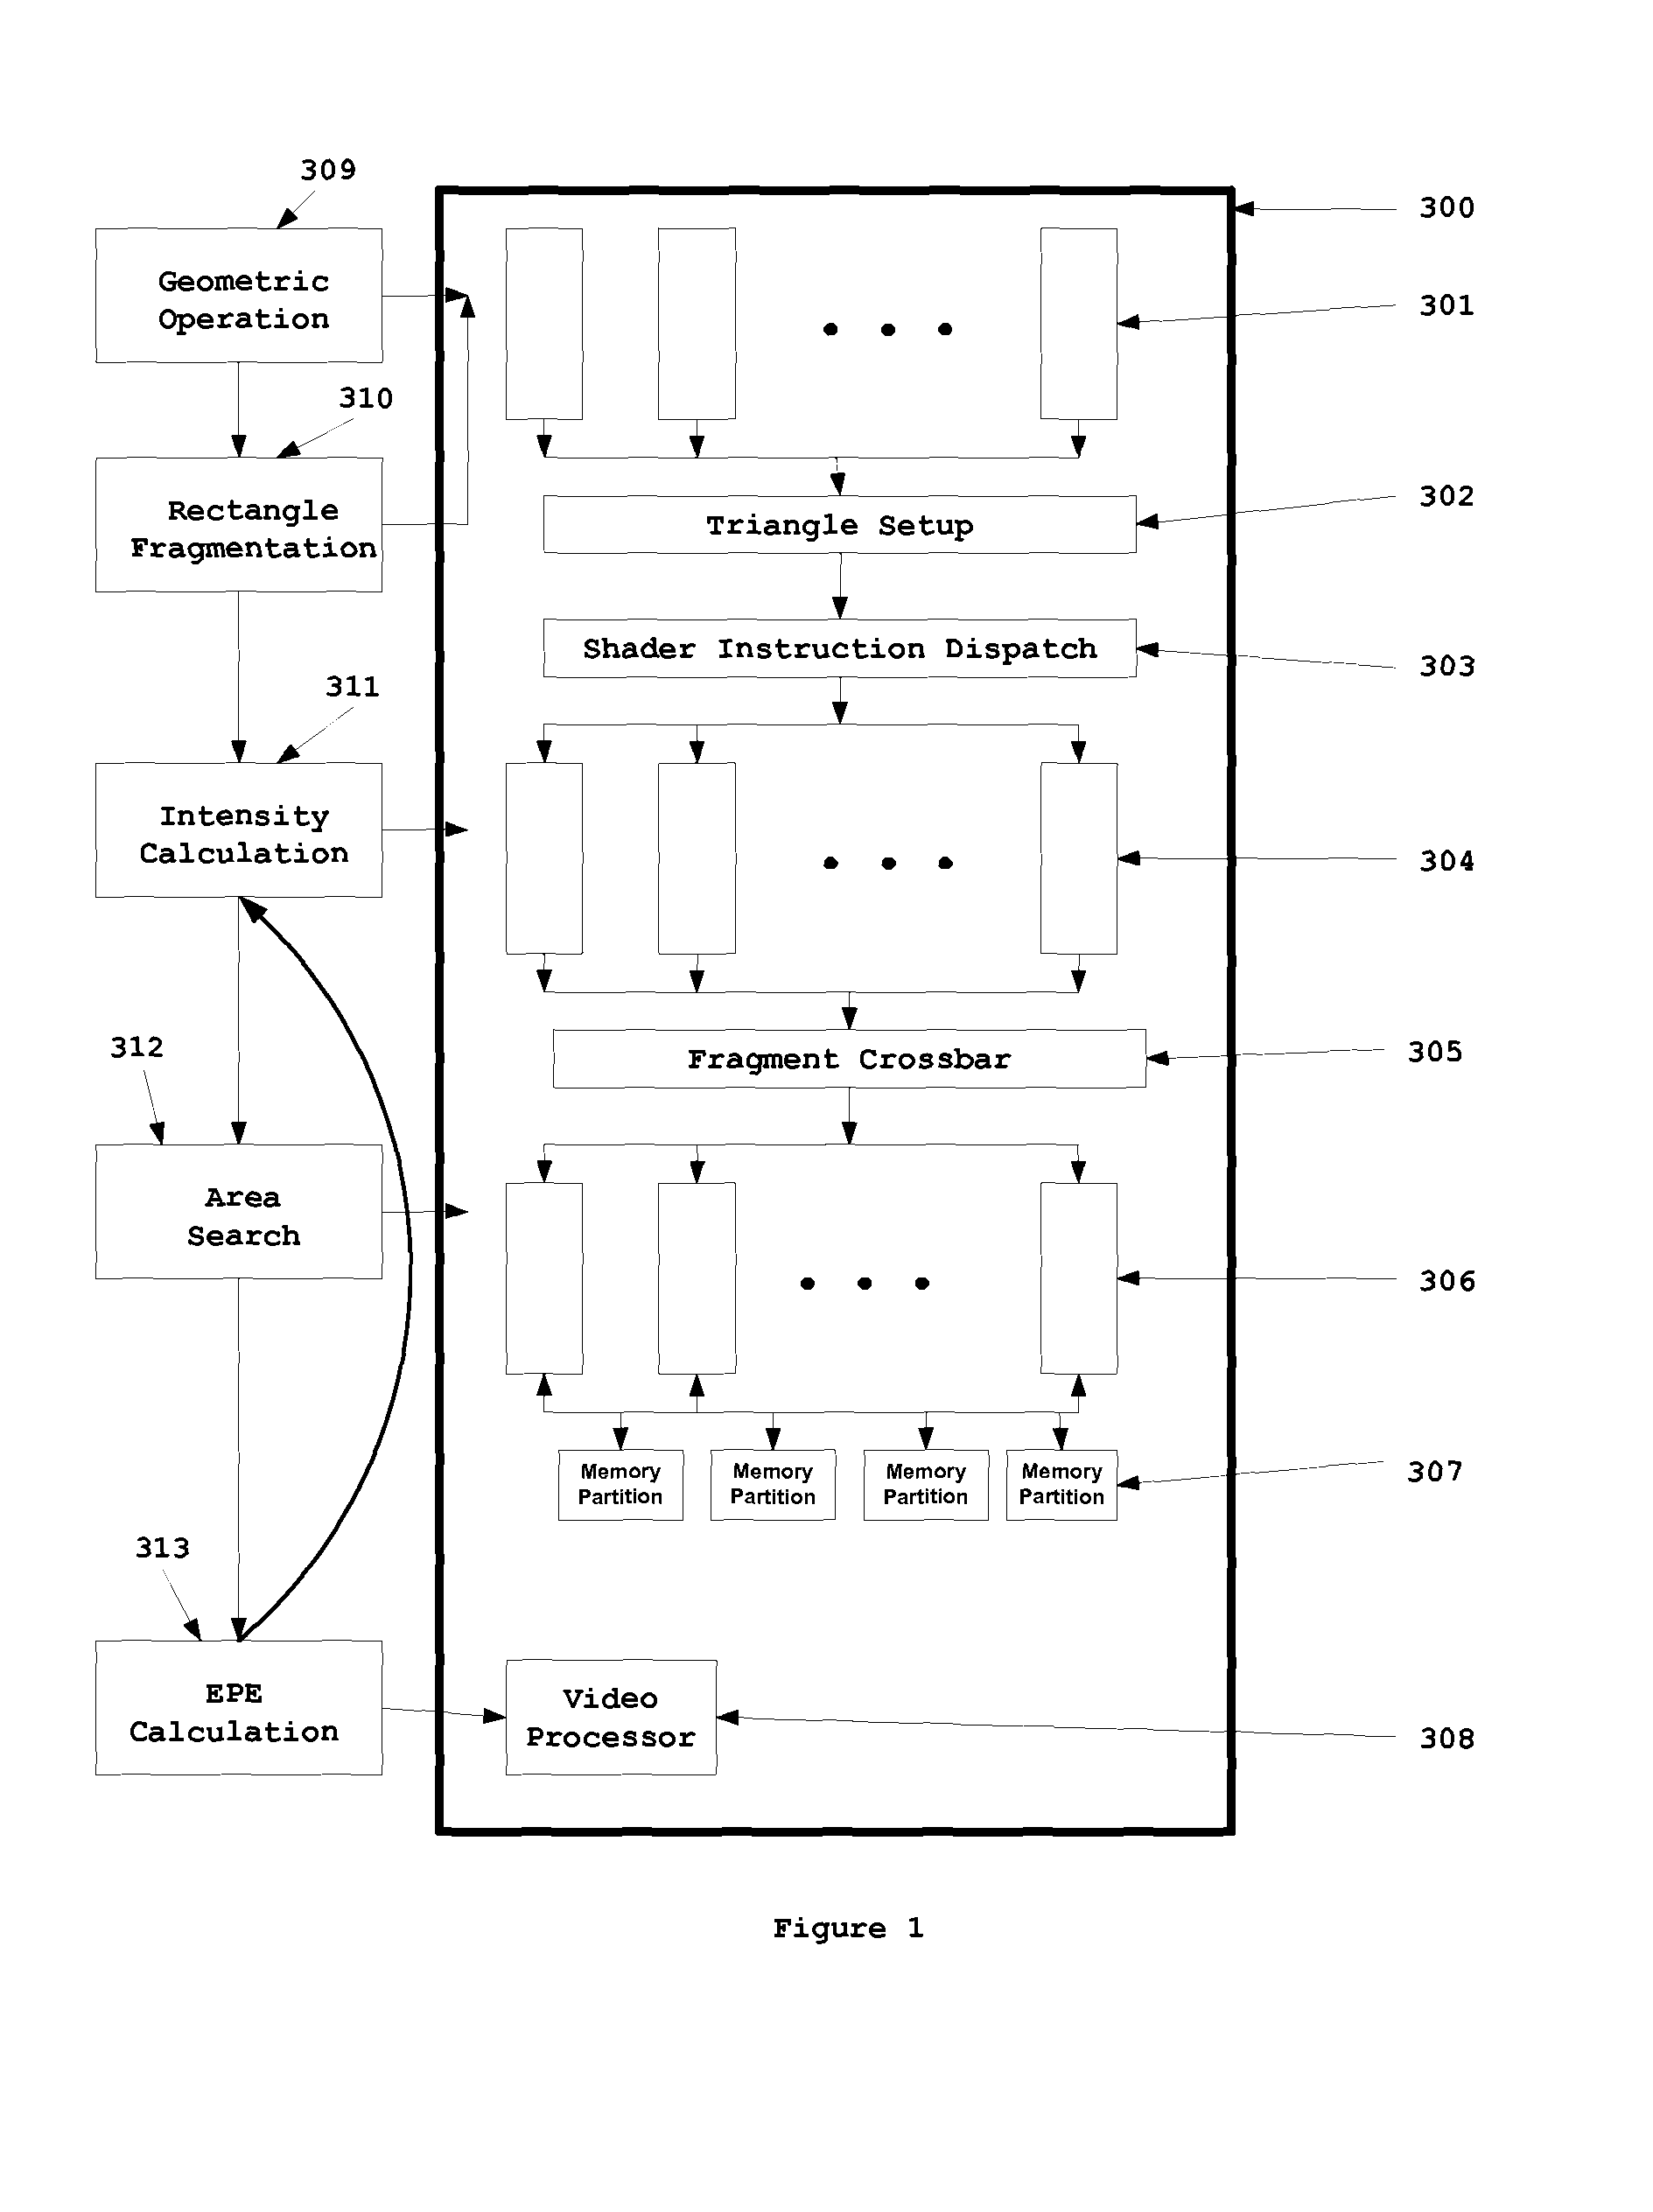 Approximate calculation of 2D matrix entries via GPU